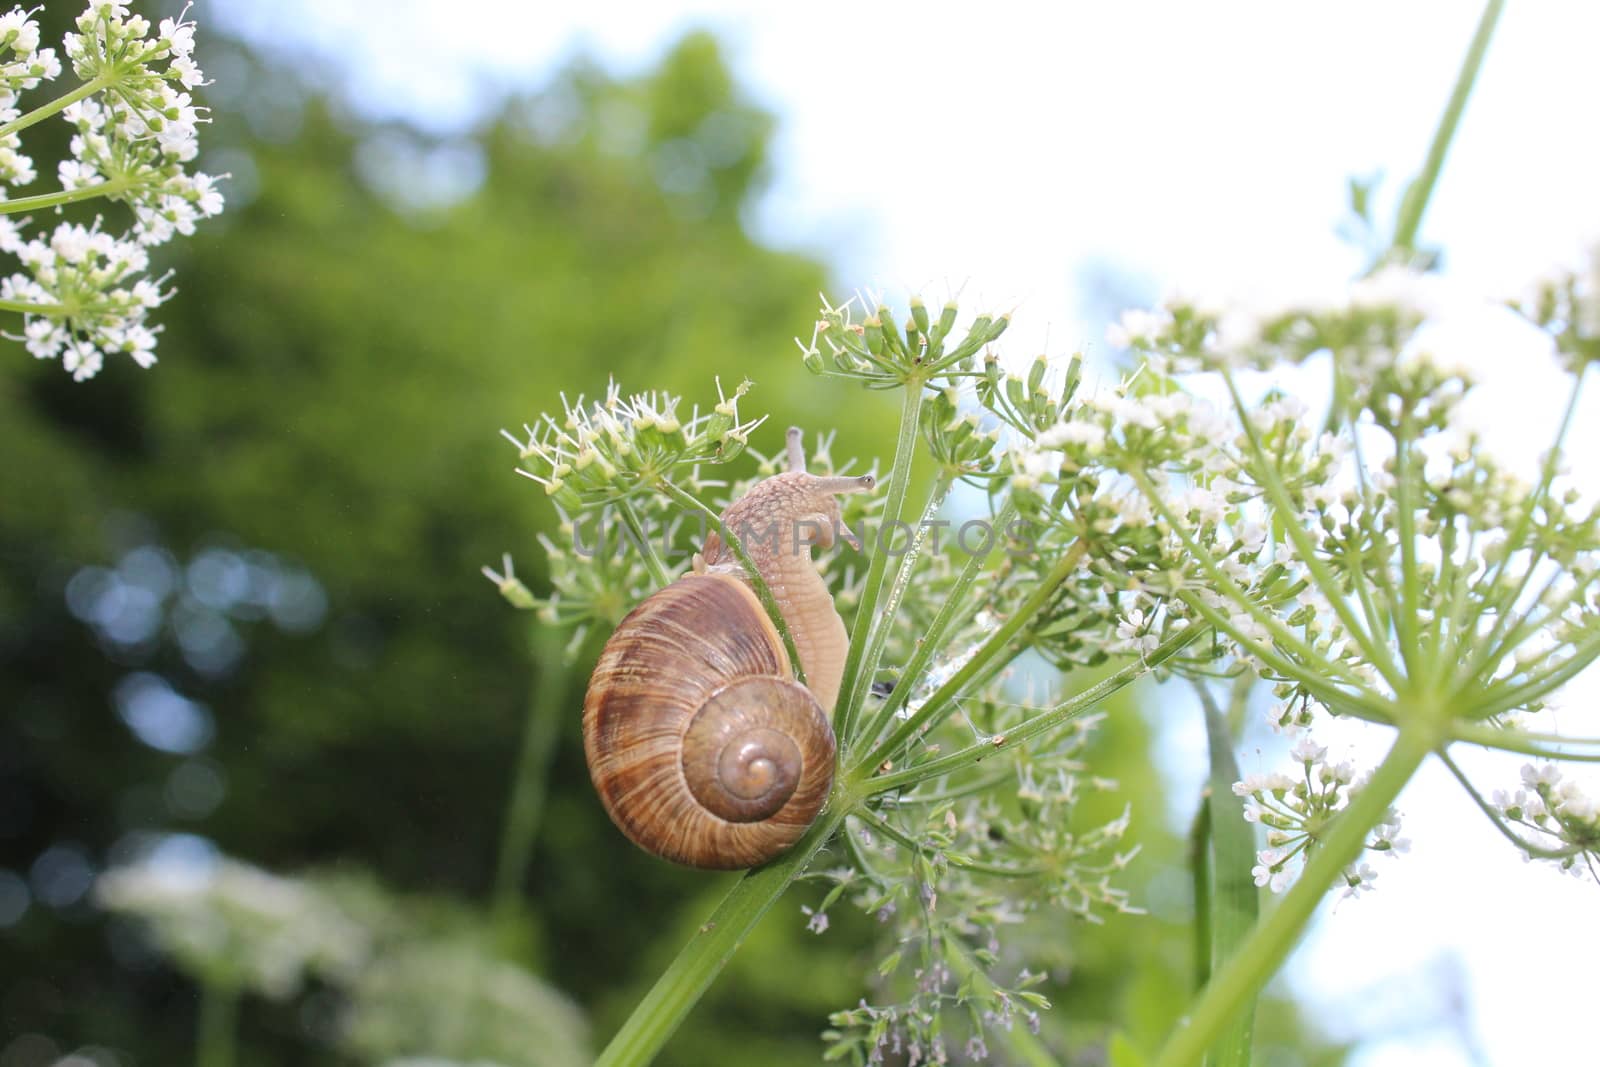 little vineyard snail on a flower by martina_unbehauen